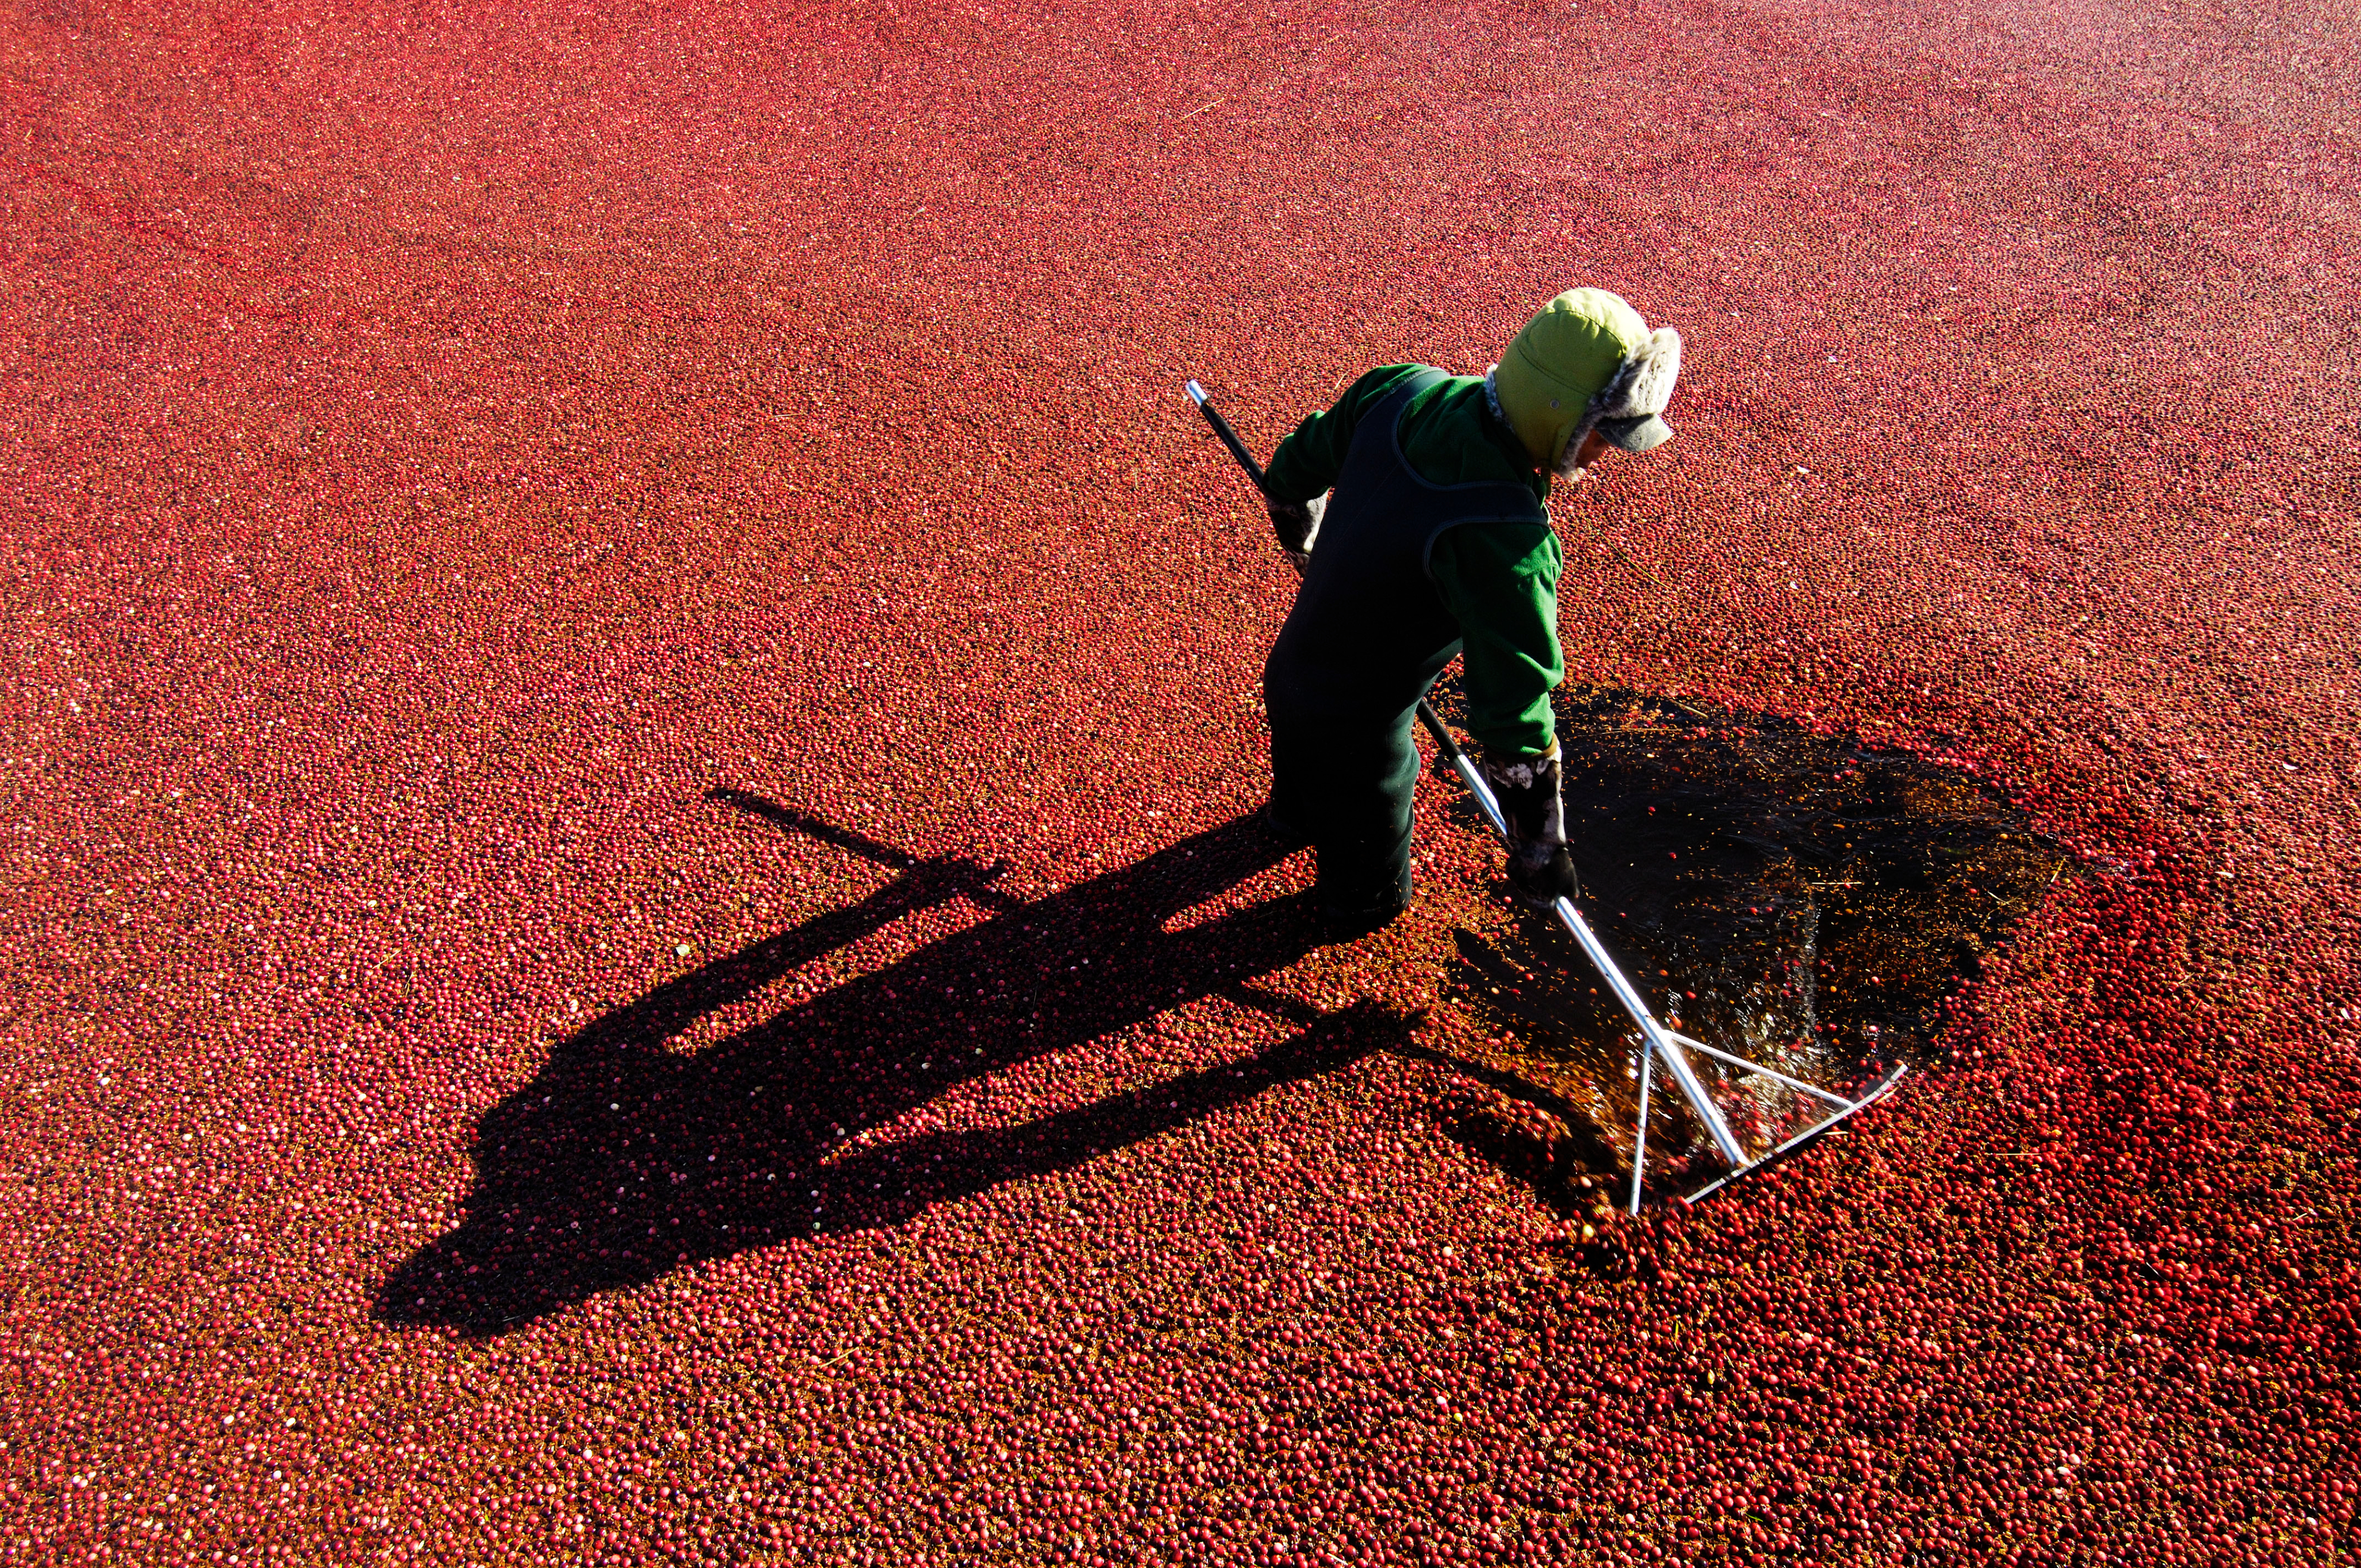 A person raking a cranberry field.